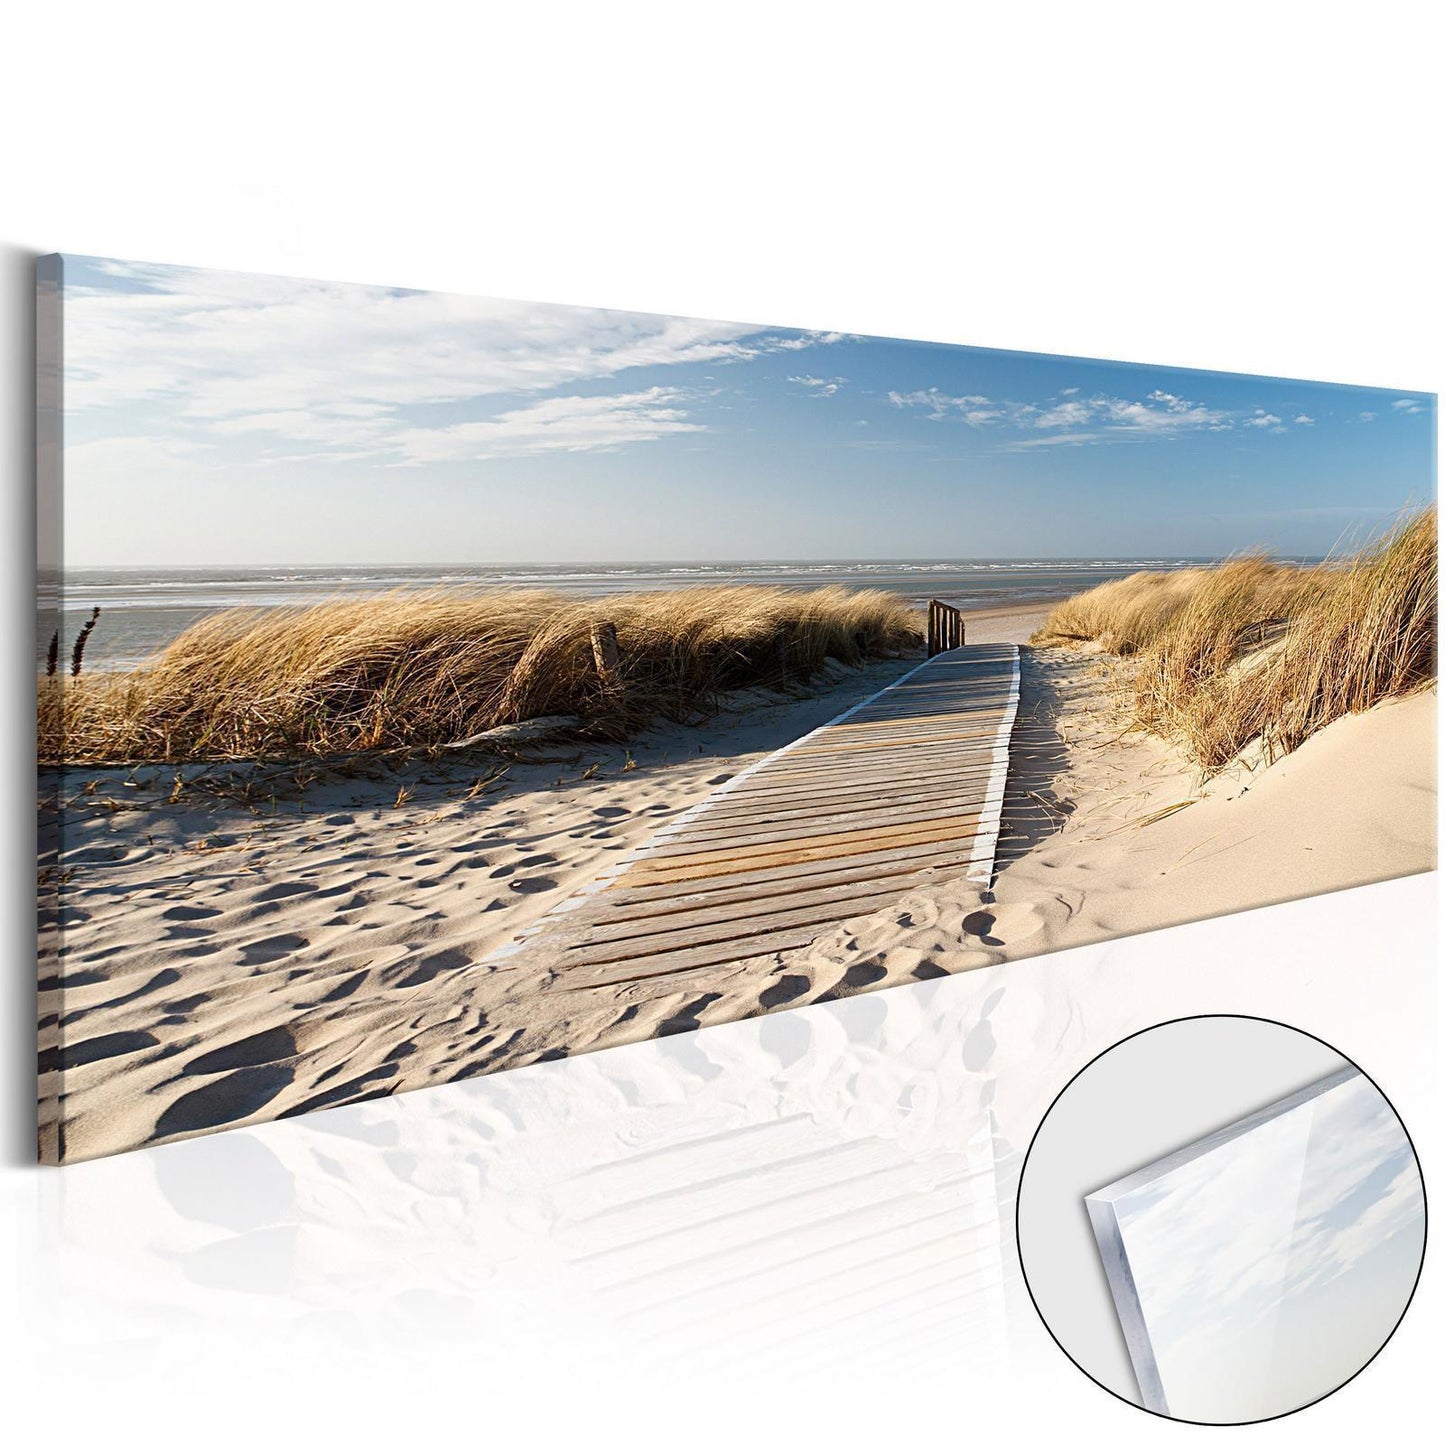 Afbeelding op acrylglas - Wild Beach